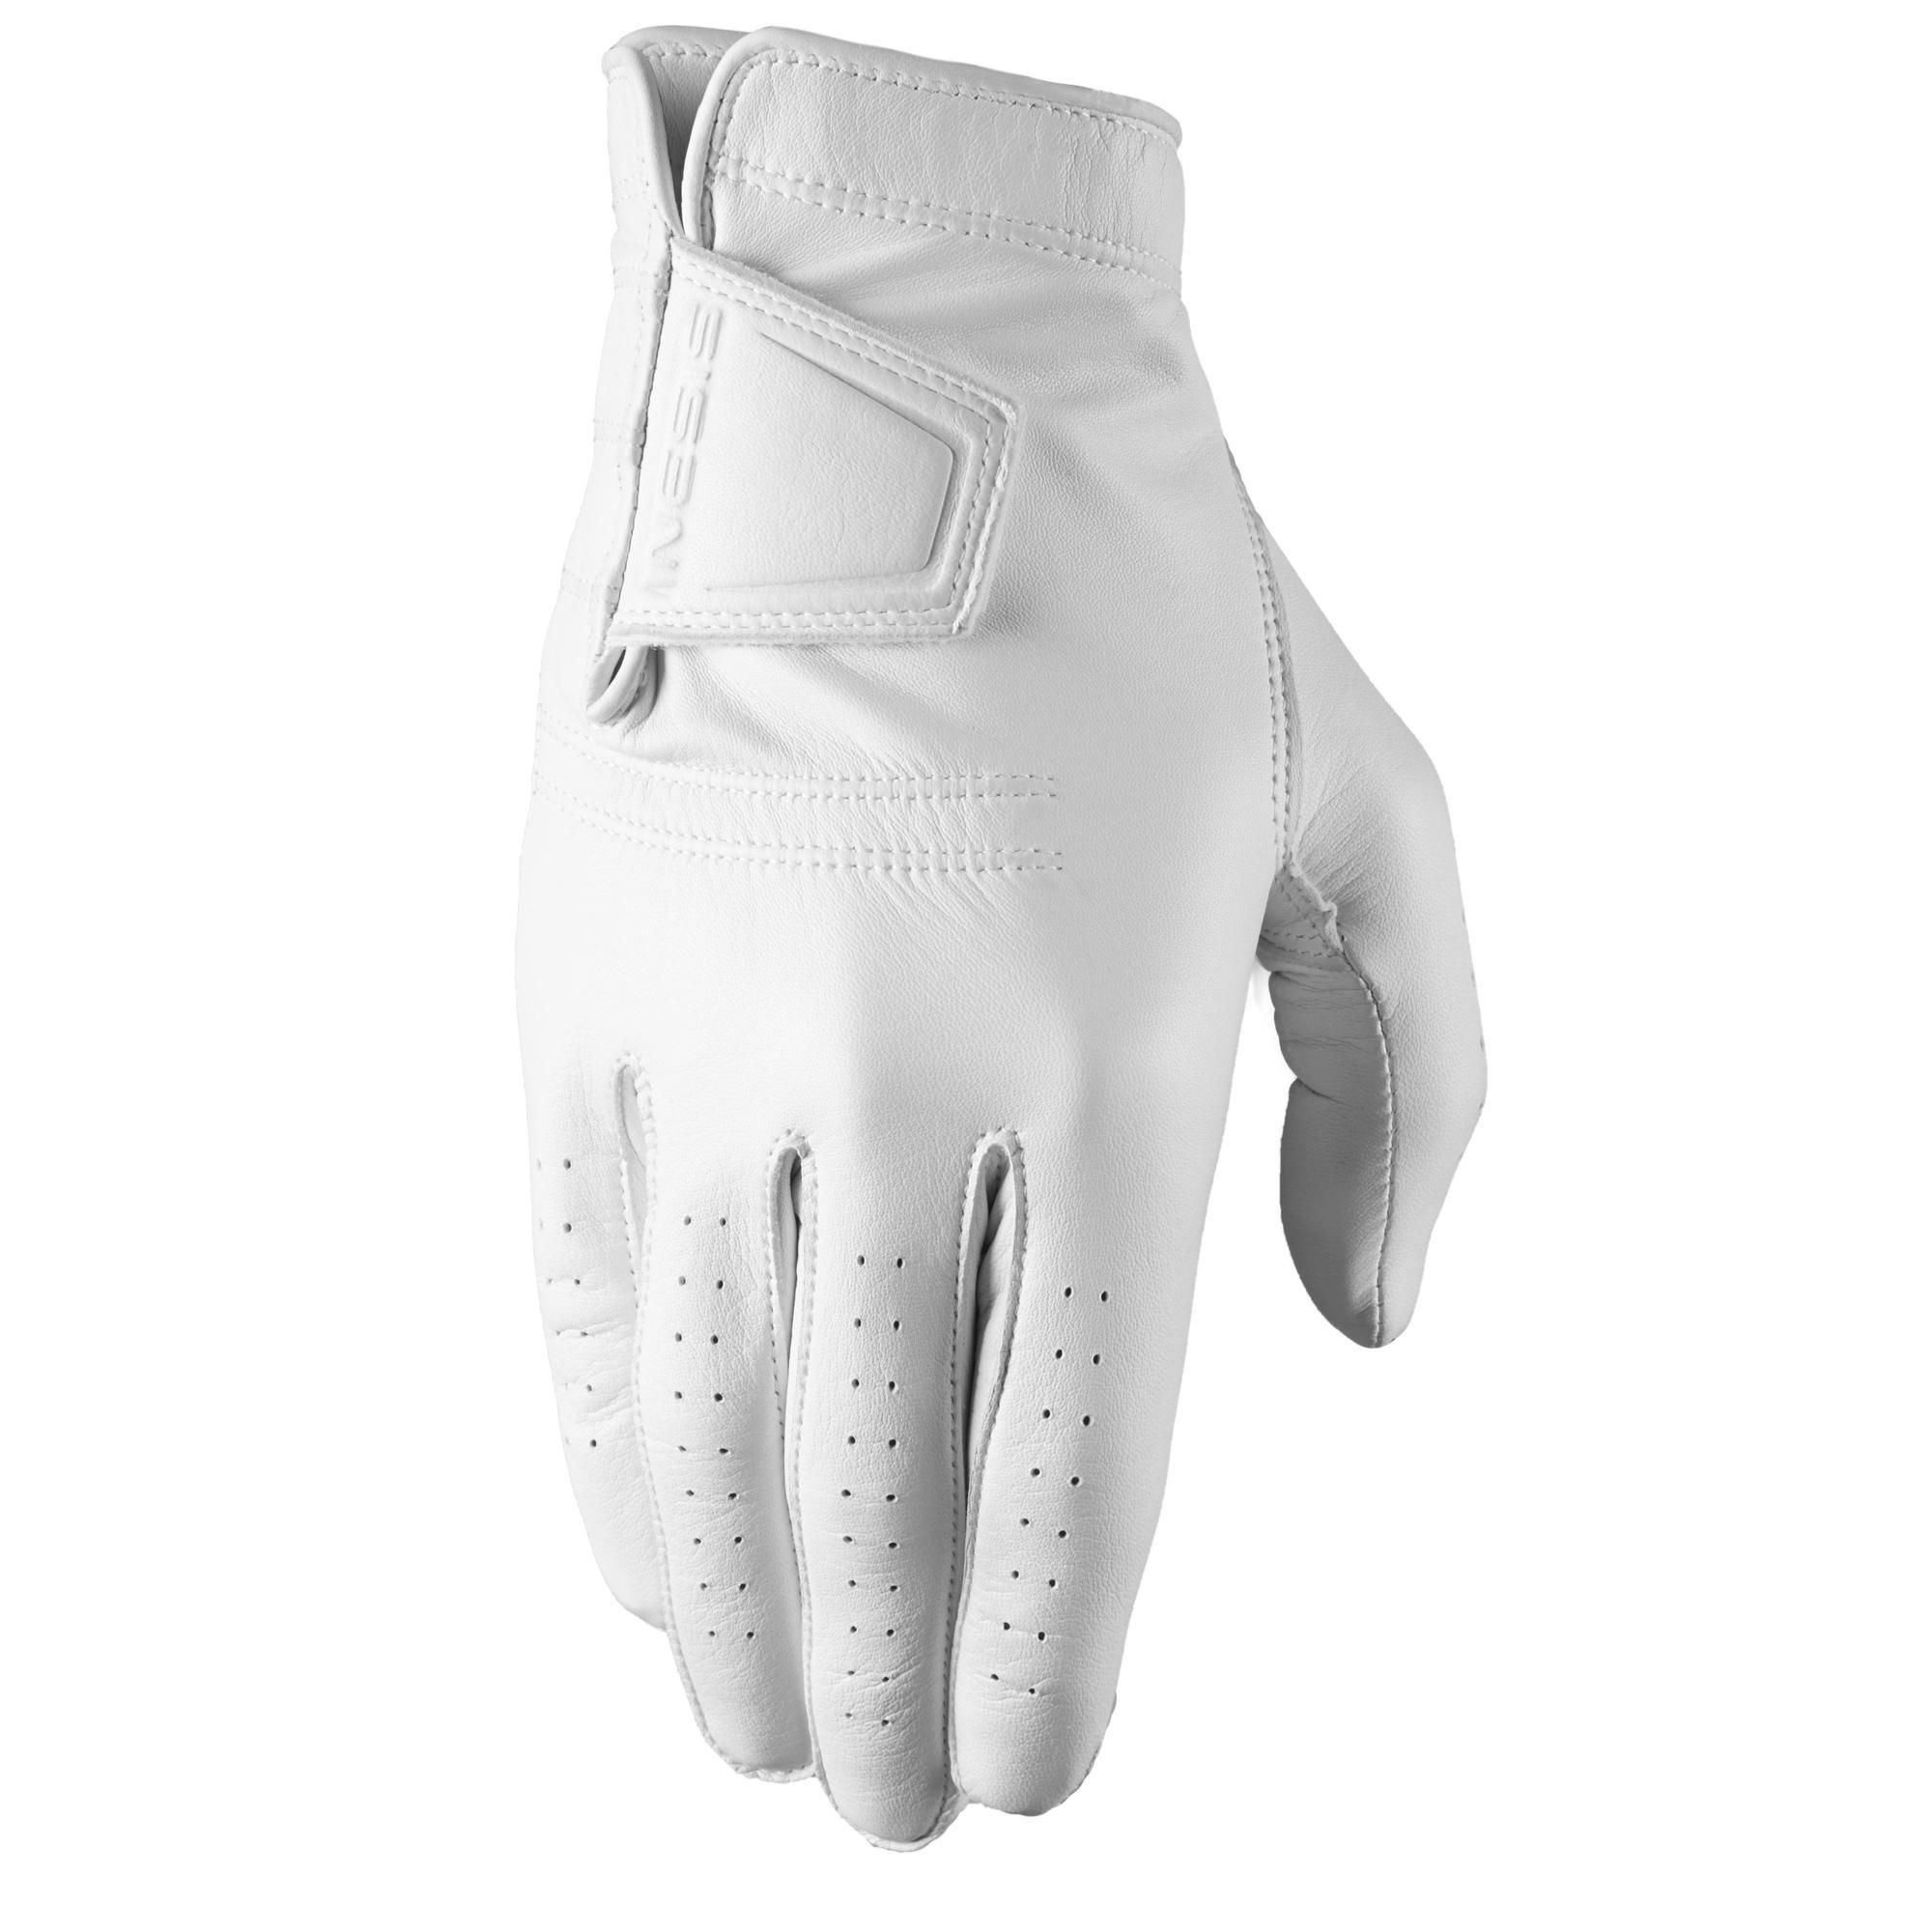 Перчатки для гольфа Decathlon Cabretta для левой руки Inesis, белый kirkland signature golf gloves premium cabretta leather x large 4 count